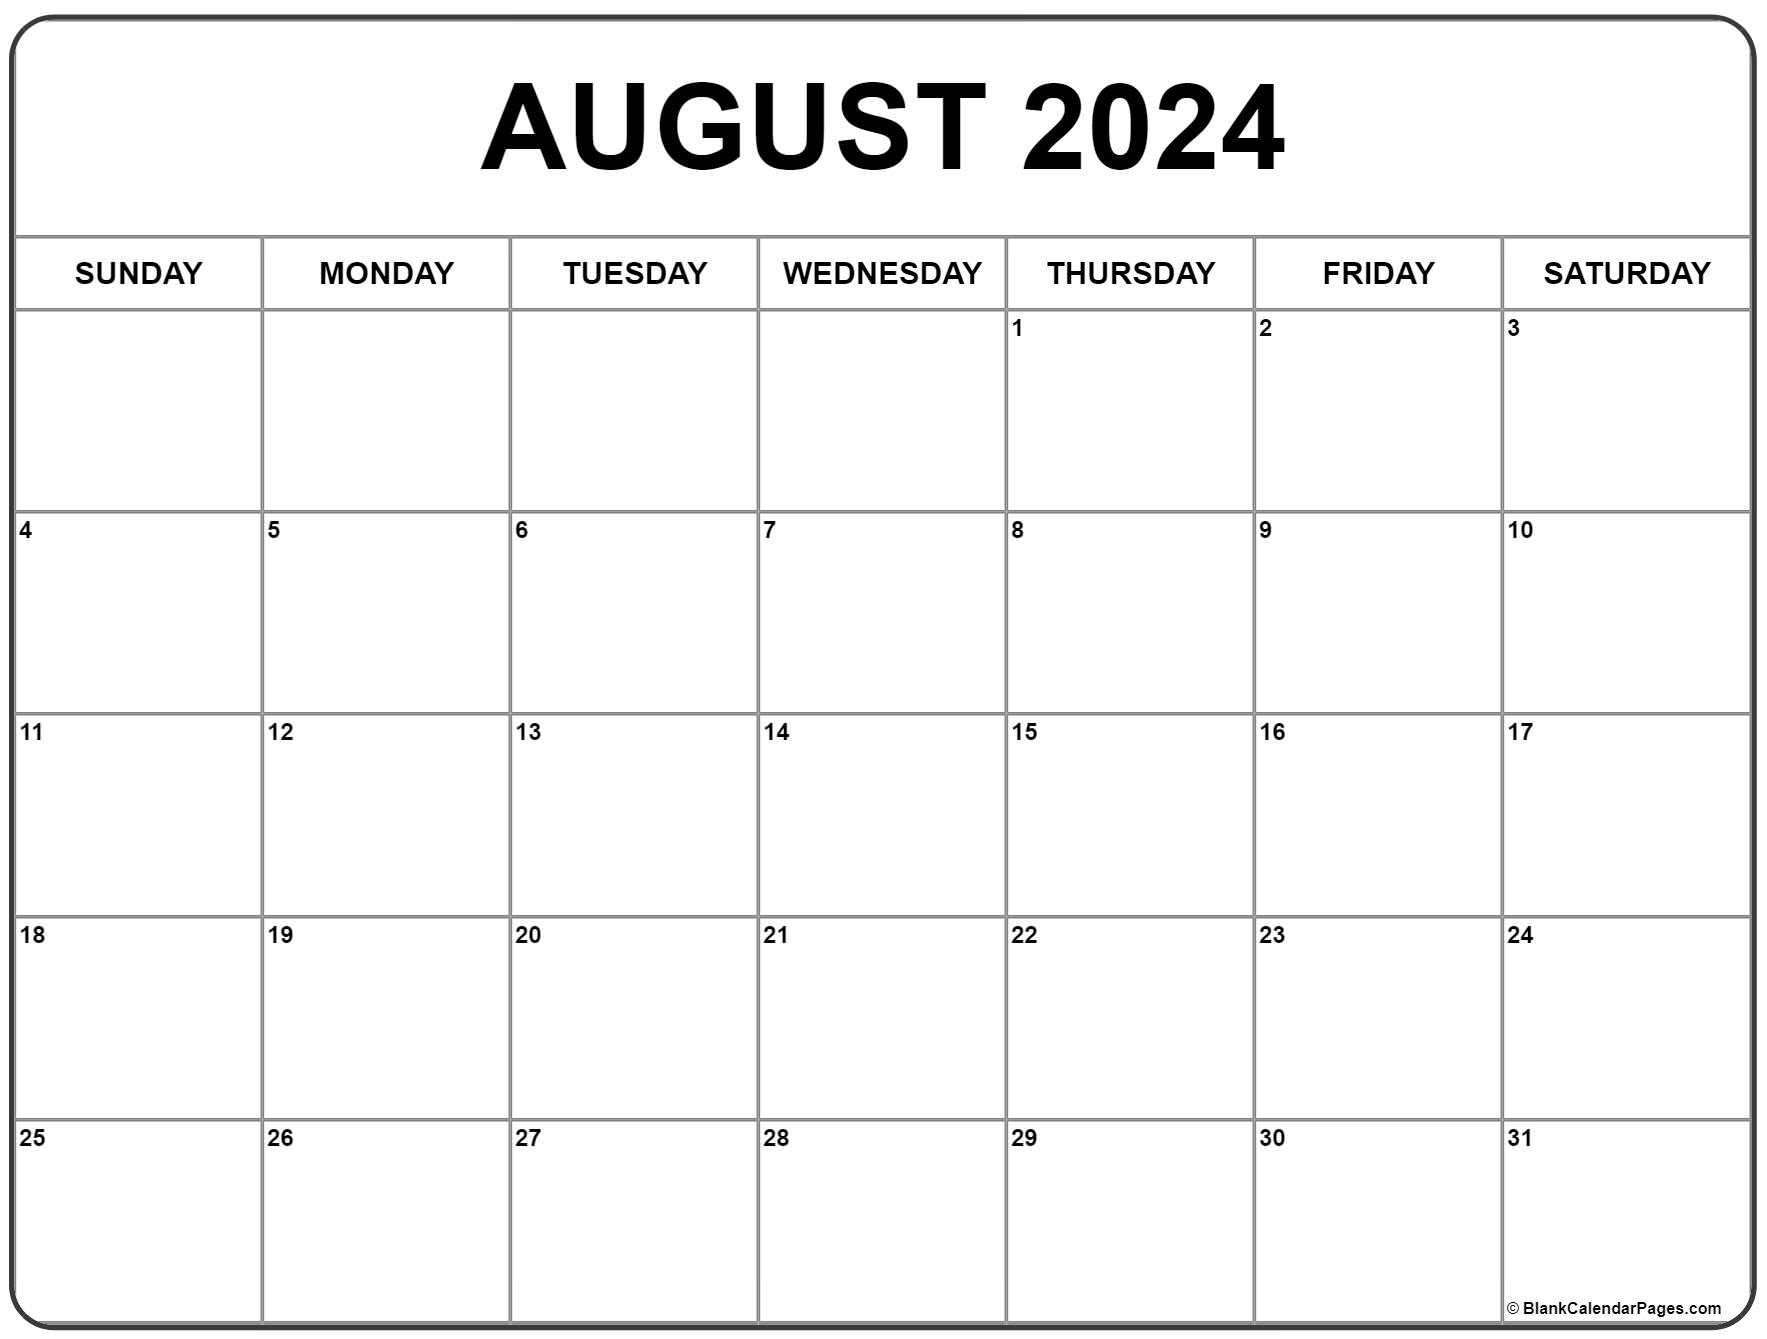 August 2024 Calendar | Free Printable Calendar for Printable August 2024 Calendar